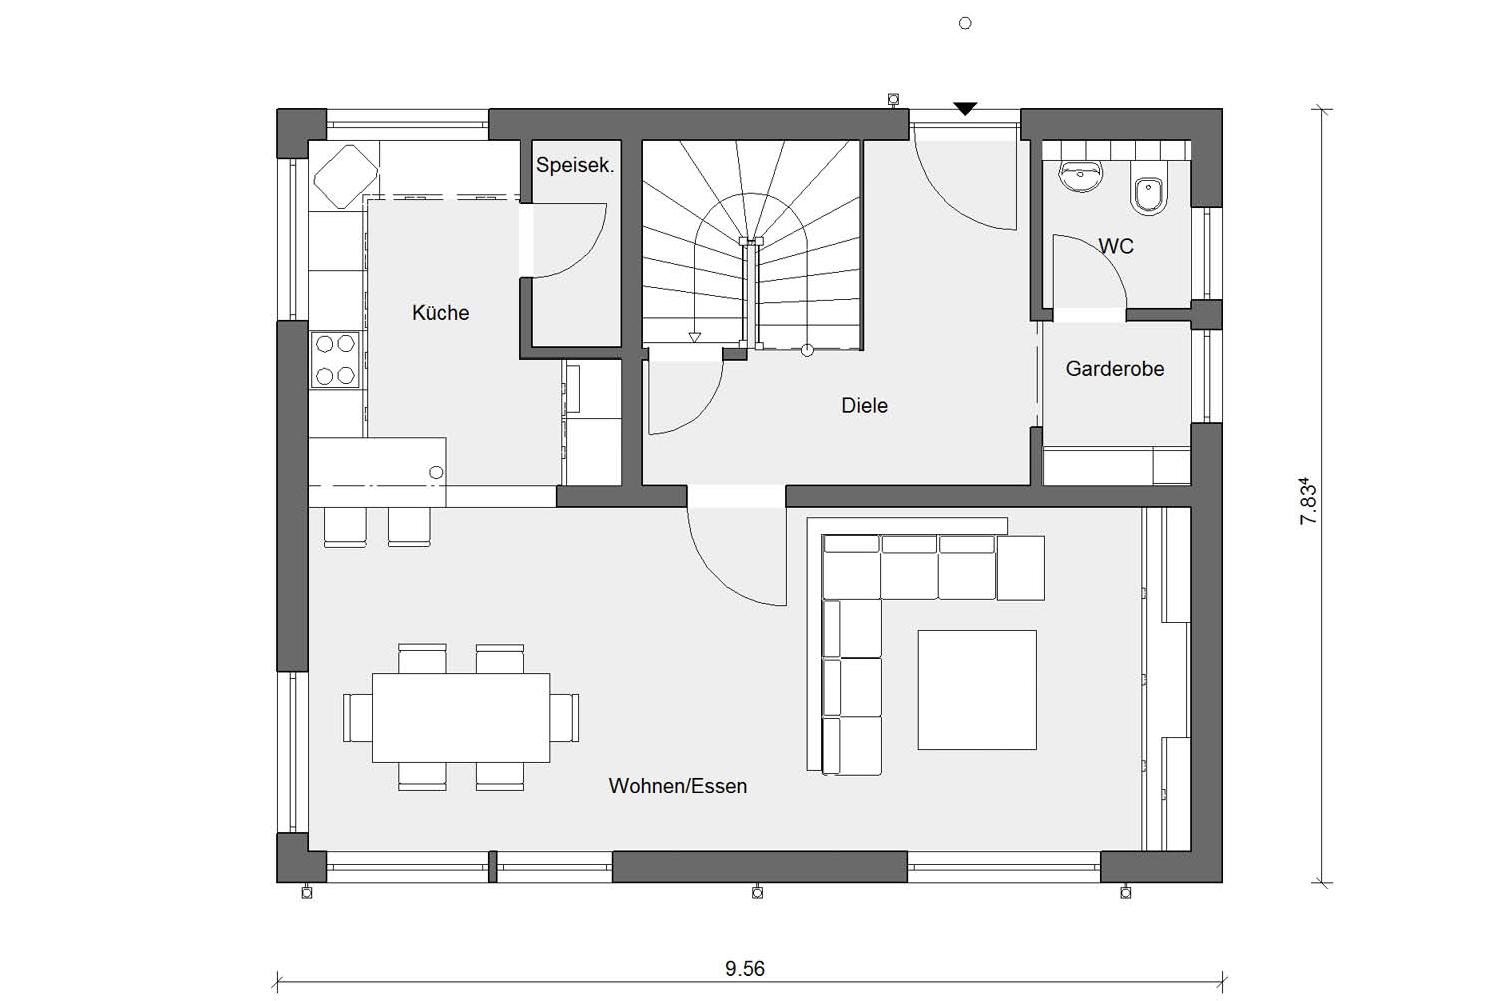 Ground floor floorplan E 15-123.4 compact single-family dwelling